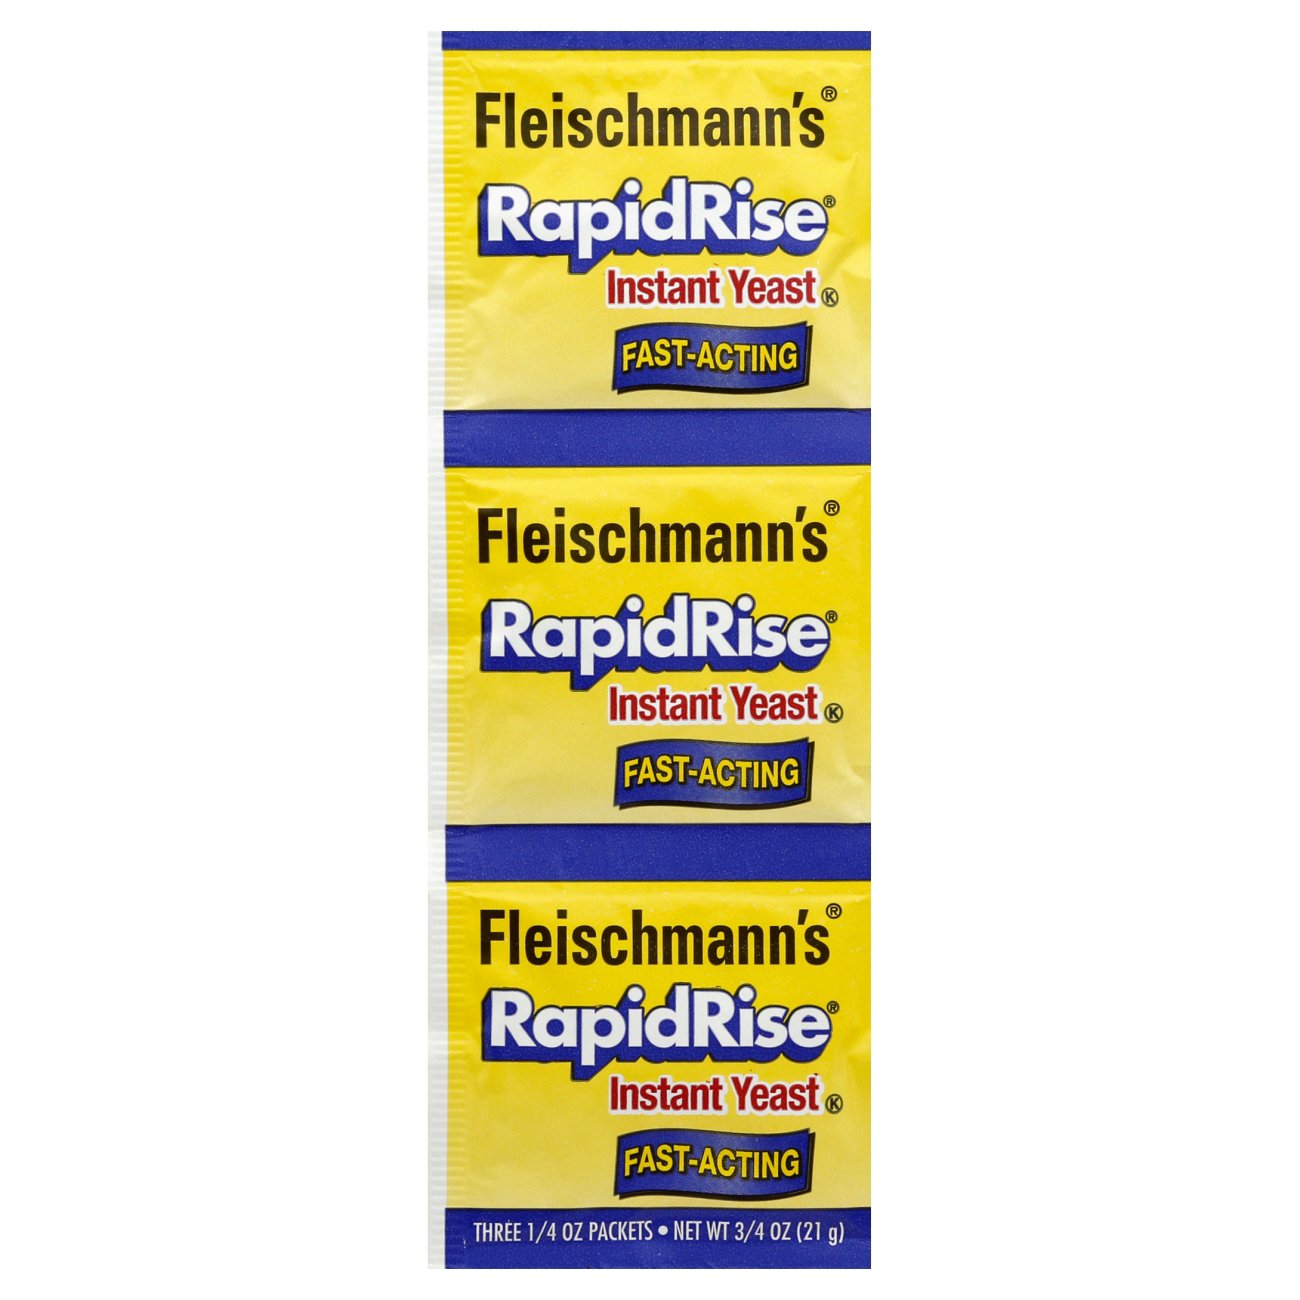 Fleischmann's RapidRise Plus Dry Yeast - Shop Yeast at H-E-B